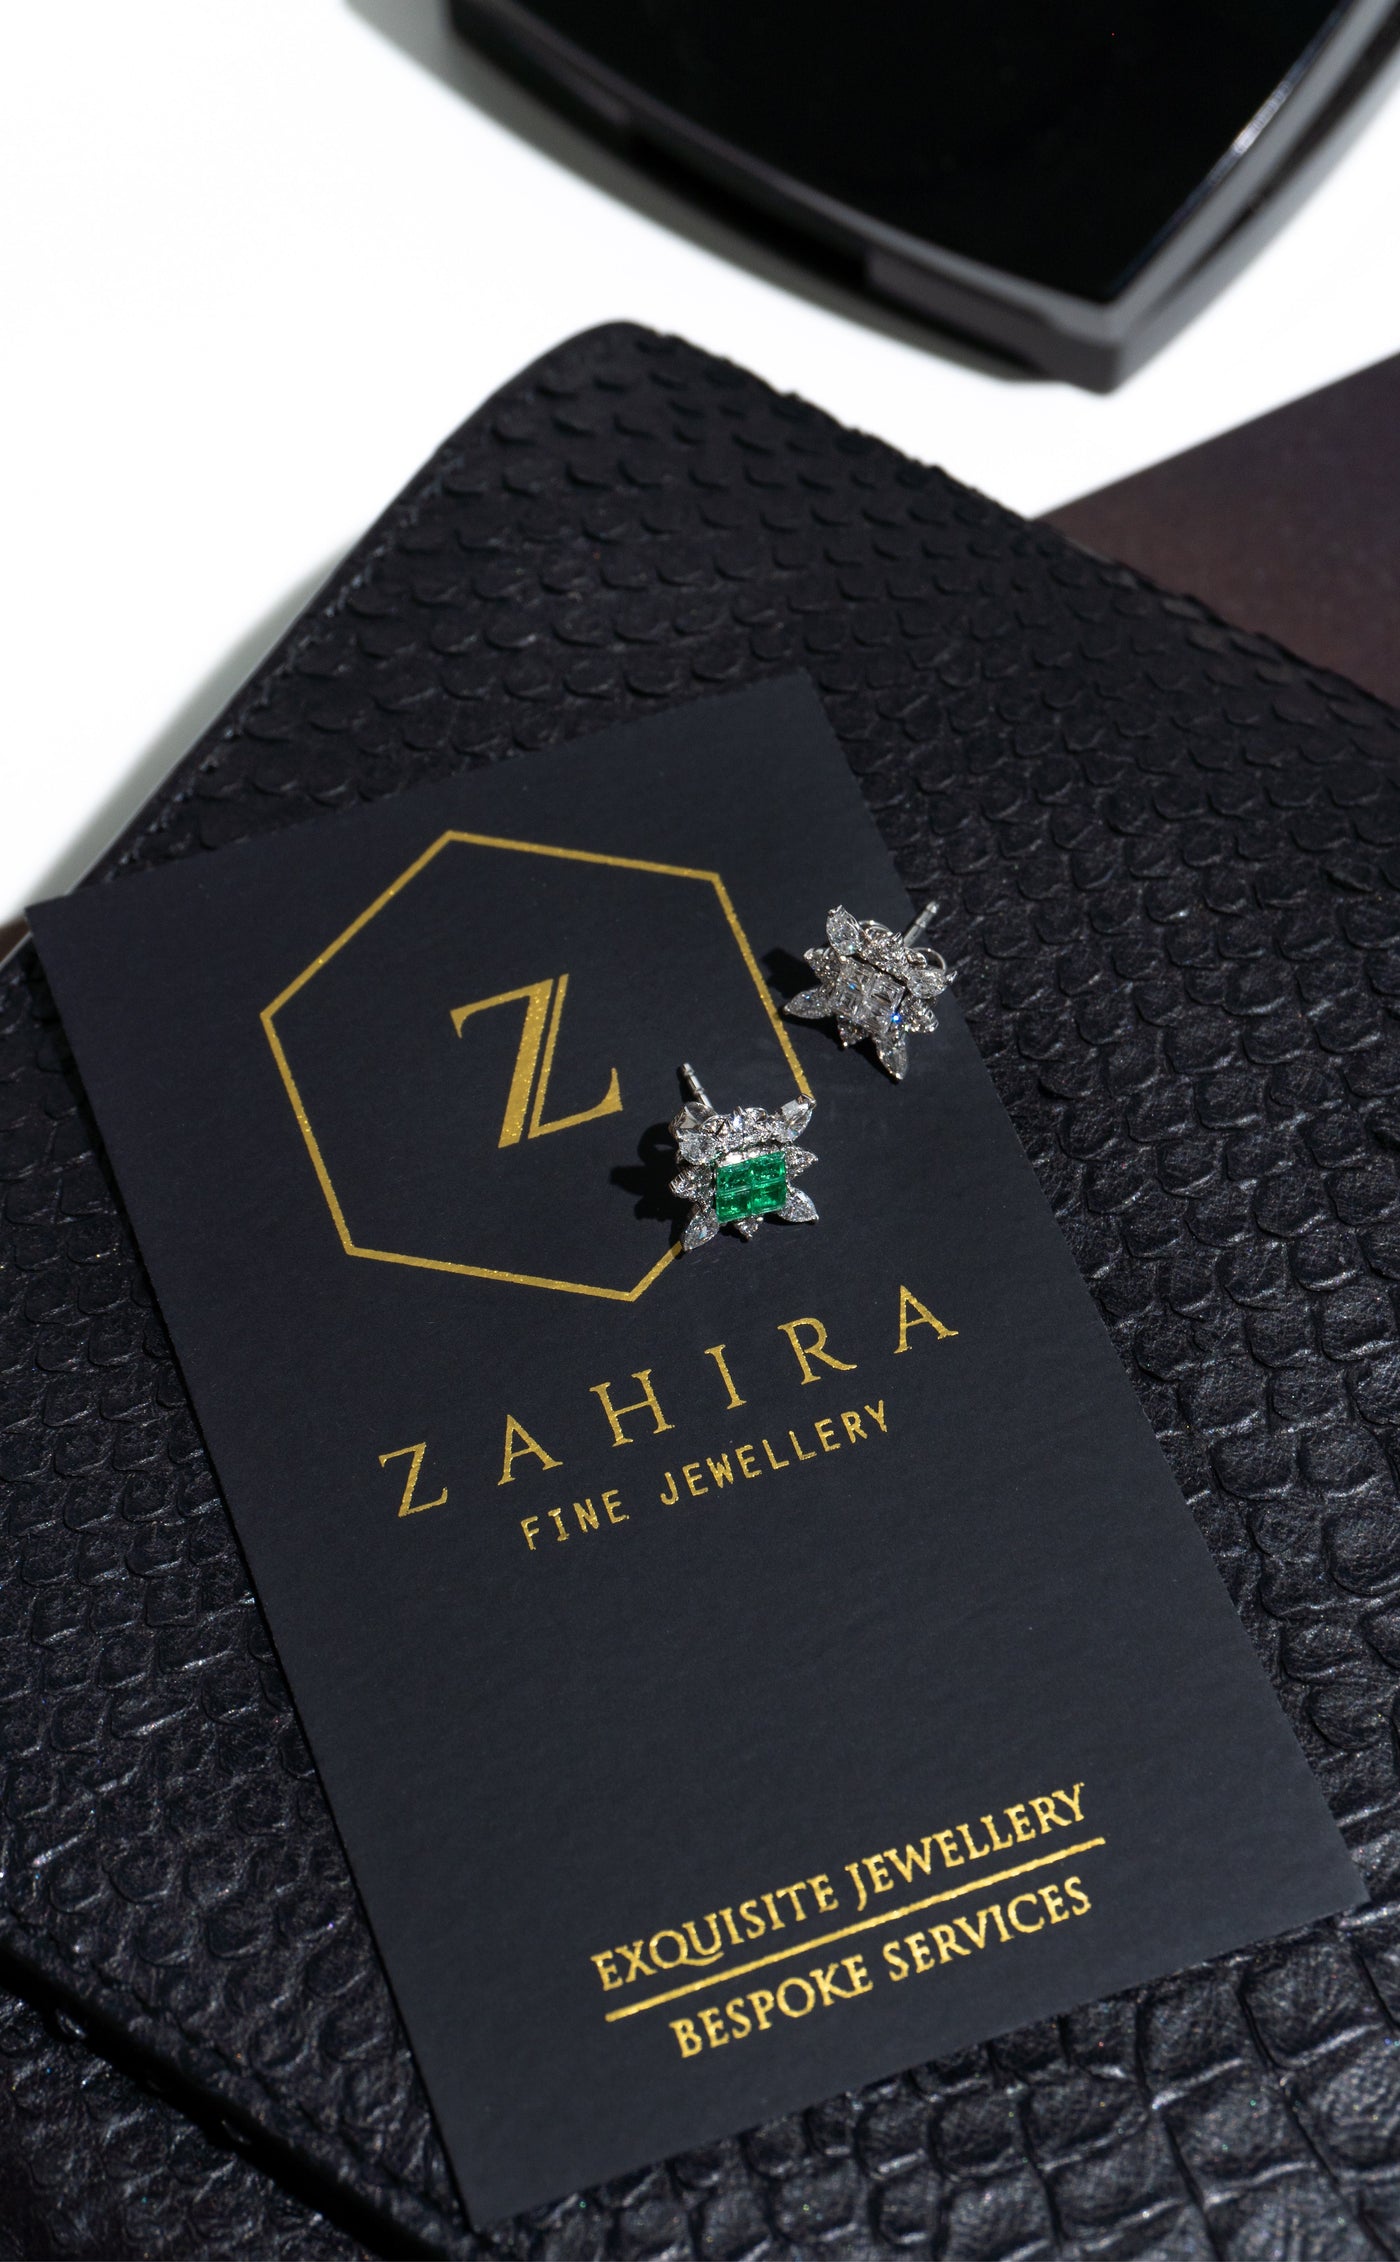 Columbian Emerald and Diamond Interchangeable Earrings in 18K White Gold